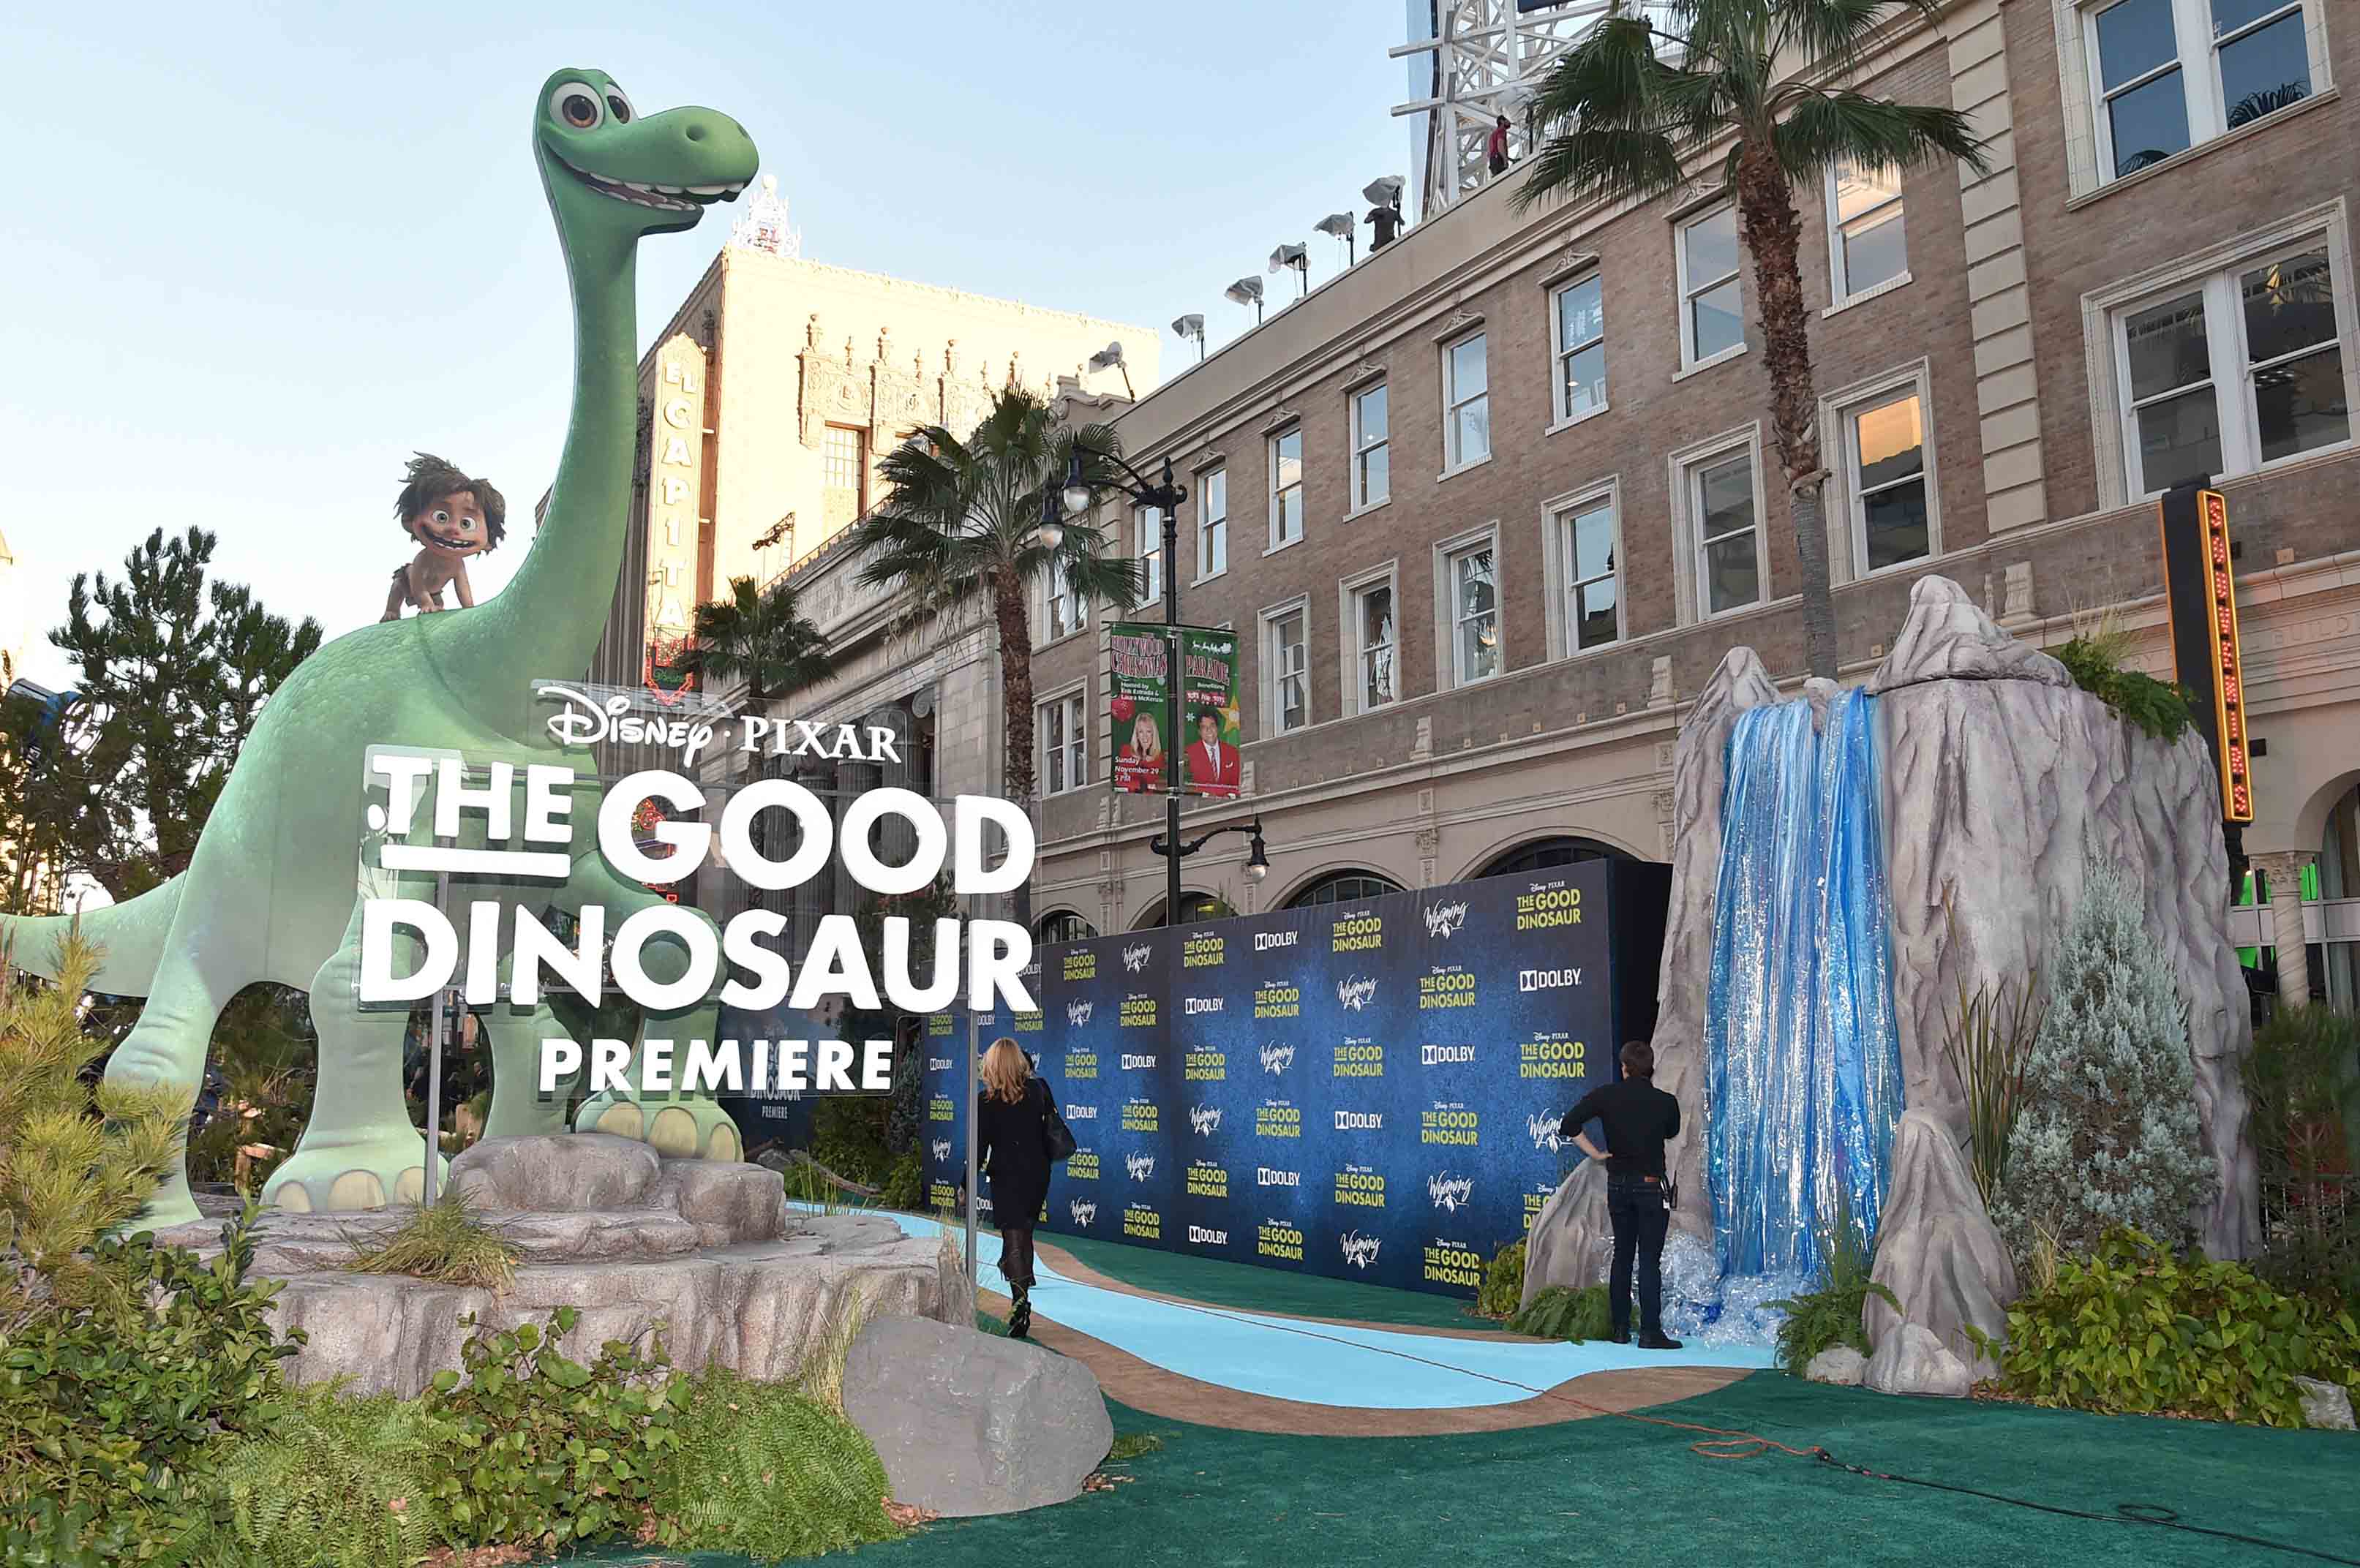 The Good Dinosaur Premiere